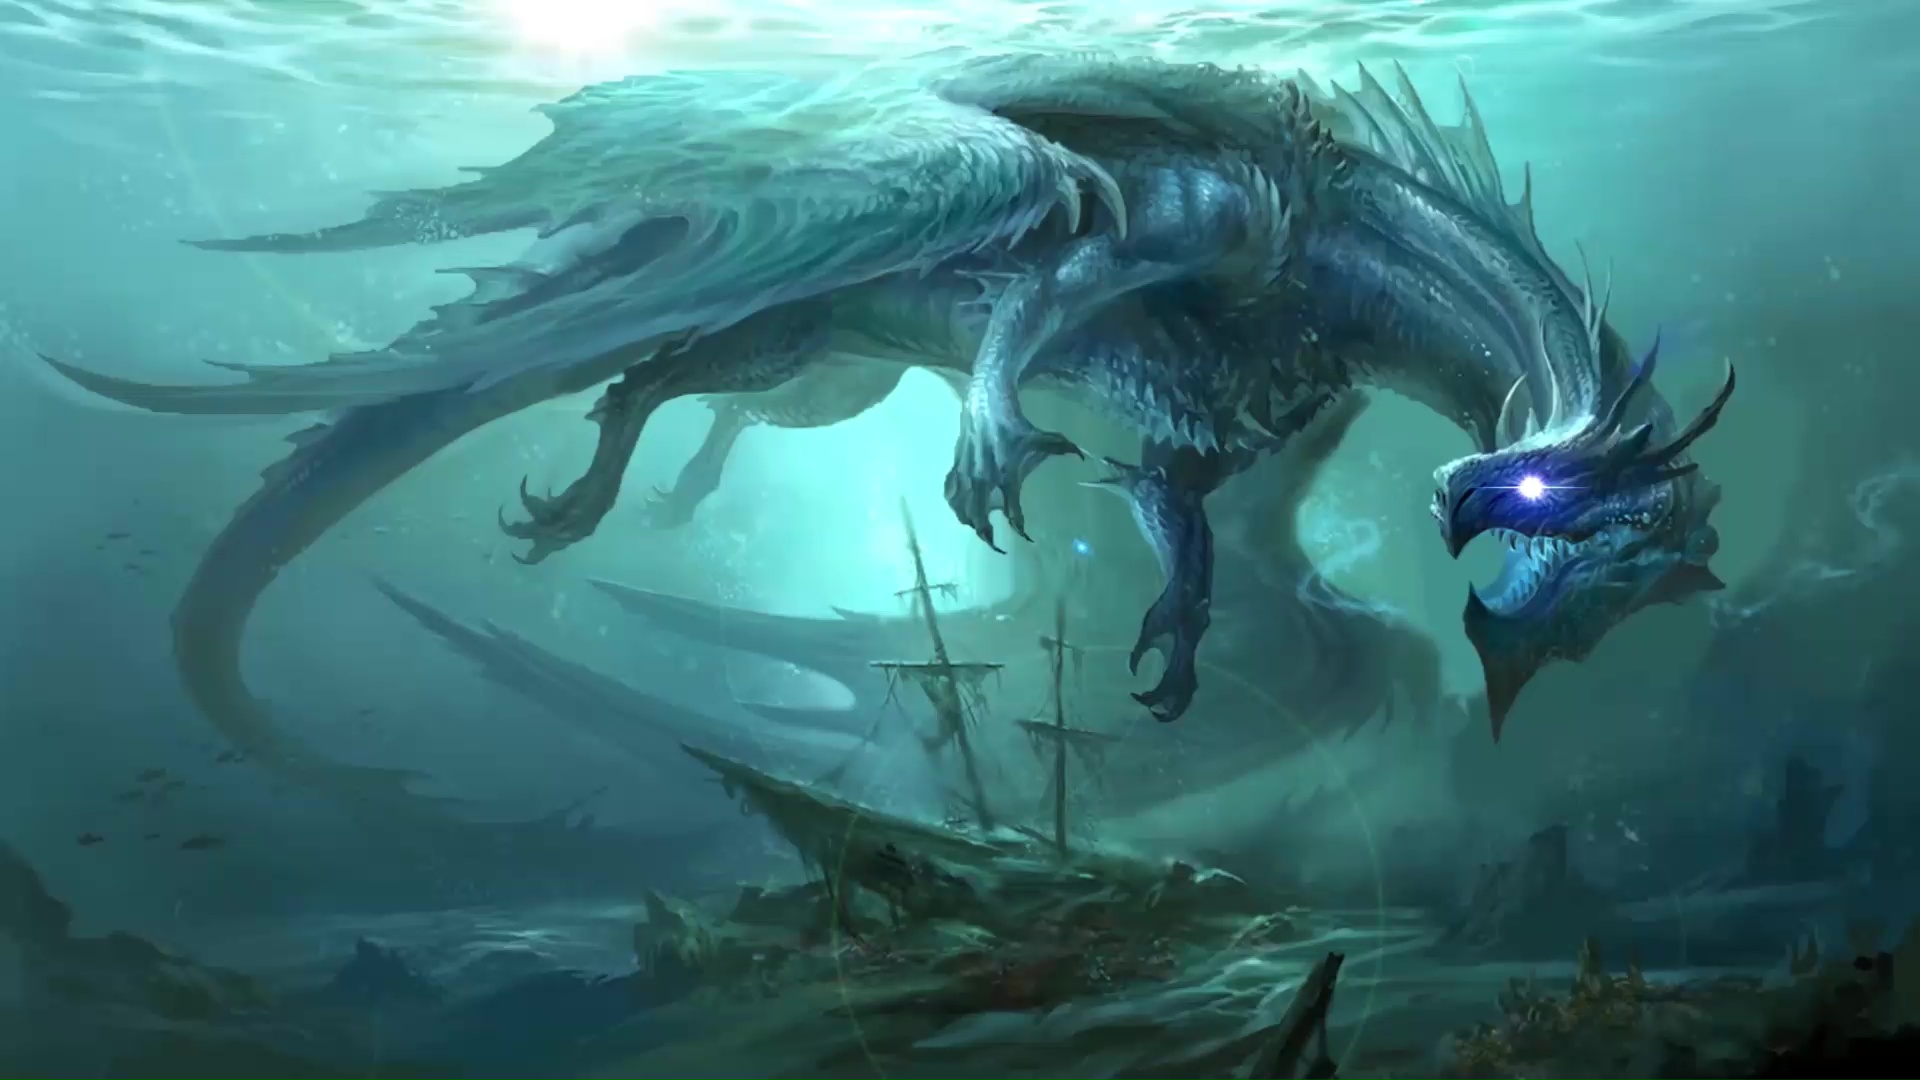 blue dragons wallpaper